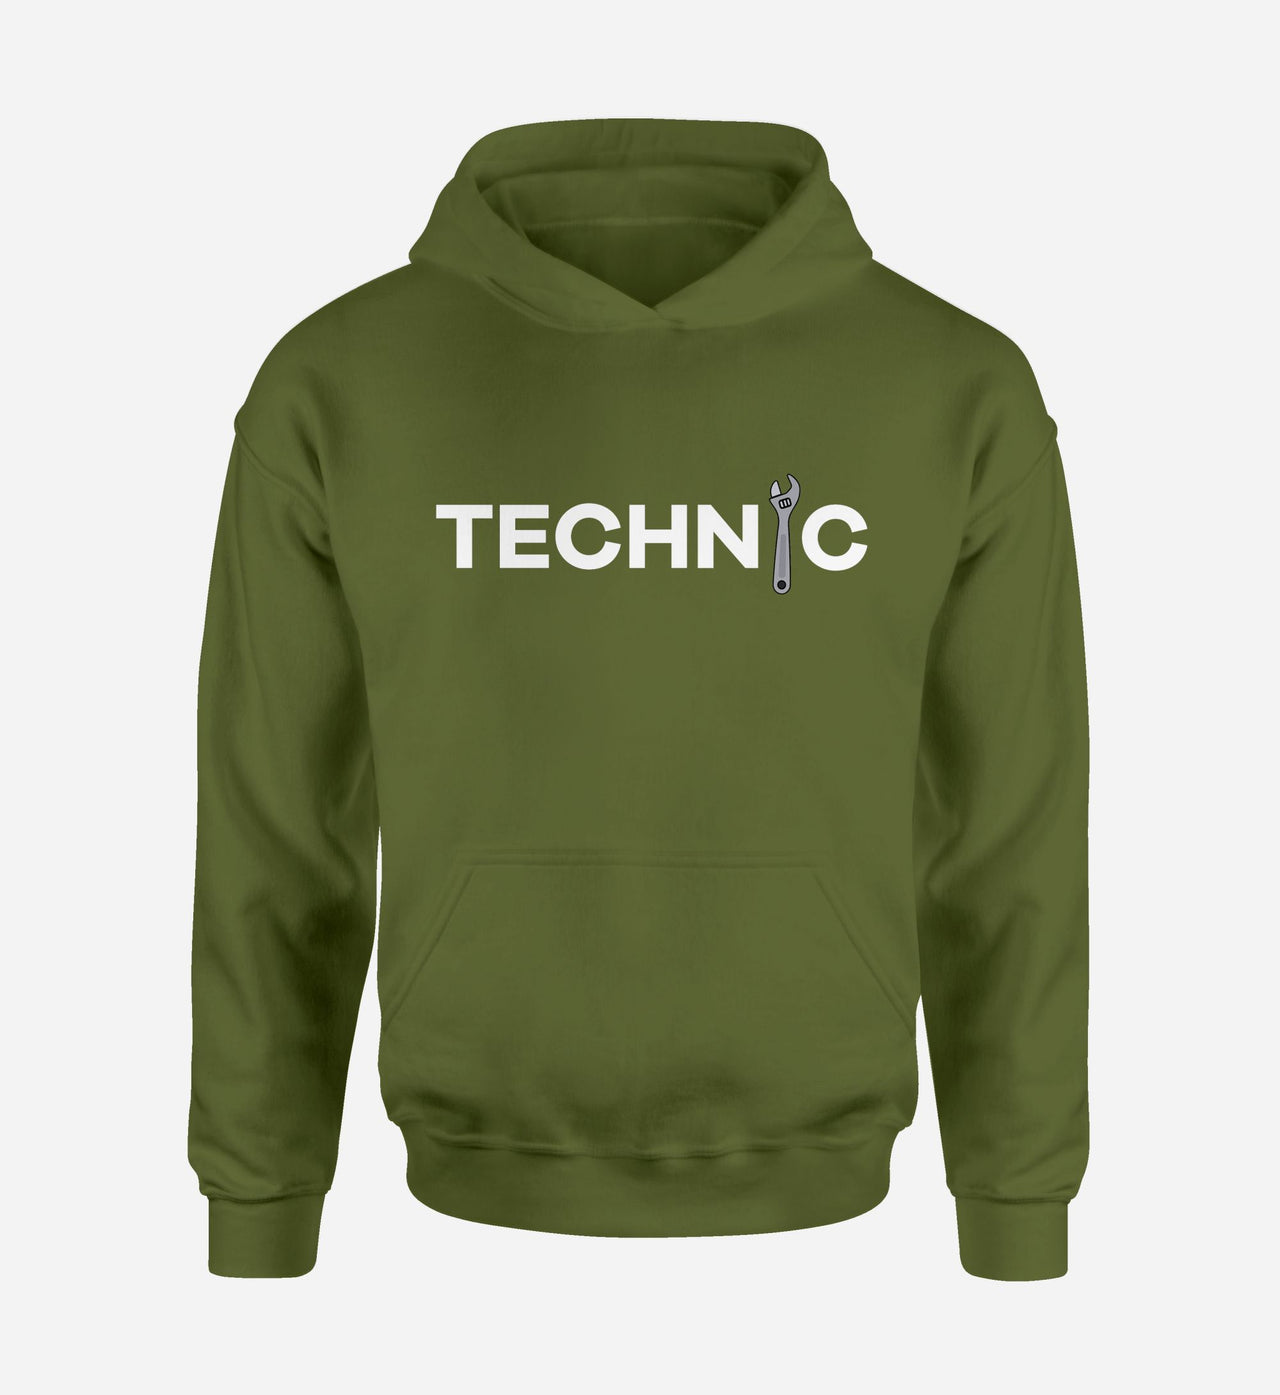 Technic Designed Hoodies